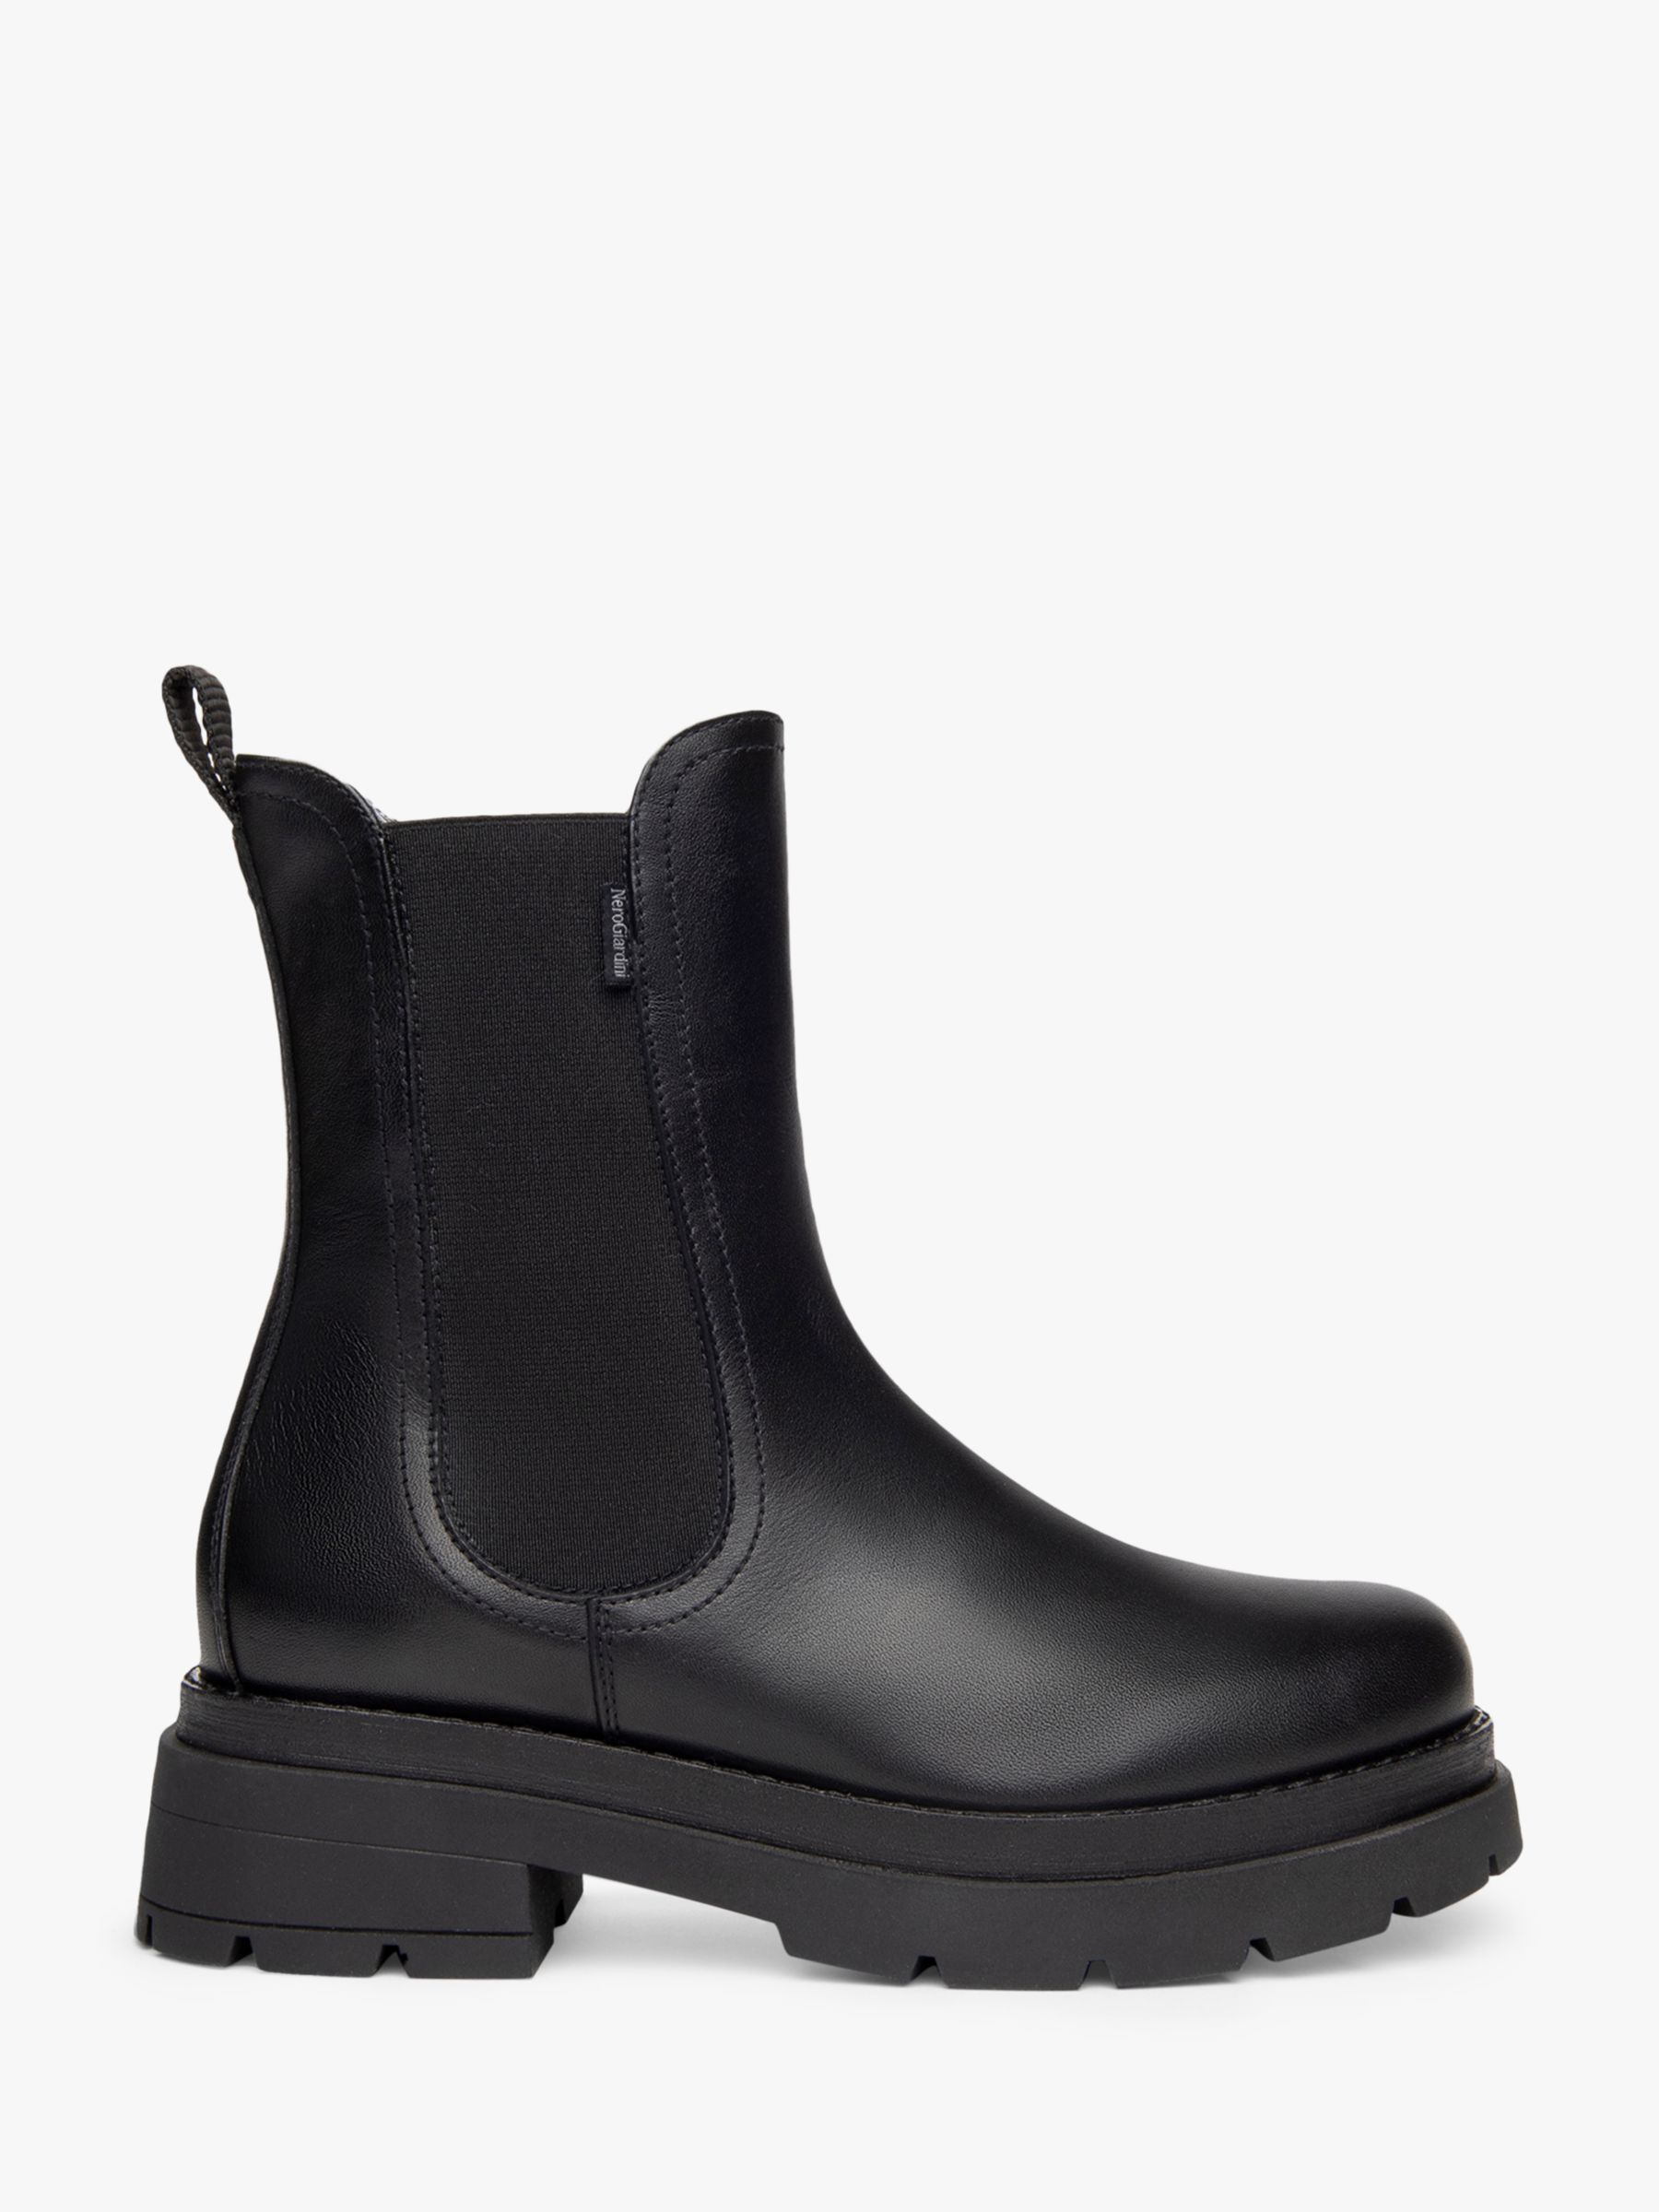 NeroGiardini Leather Chelsea Boots, Black at John Lewis & Partners